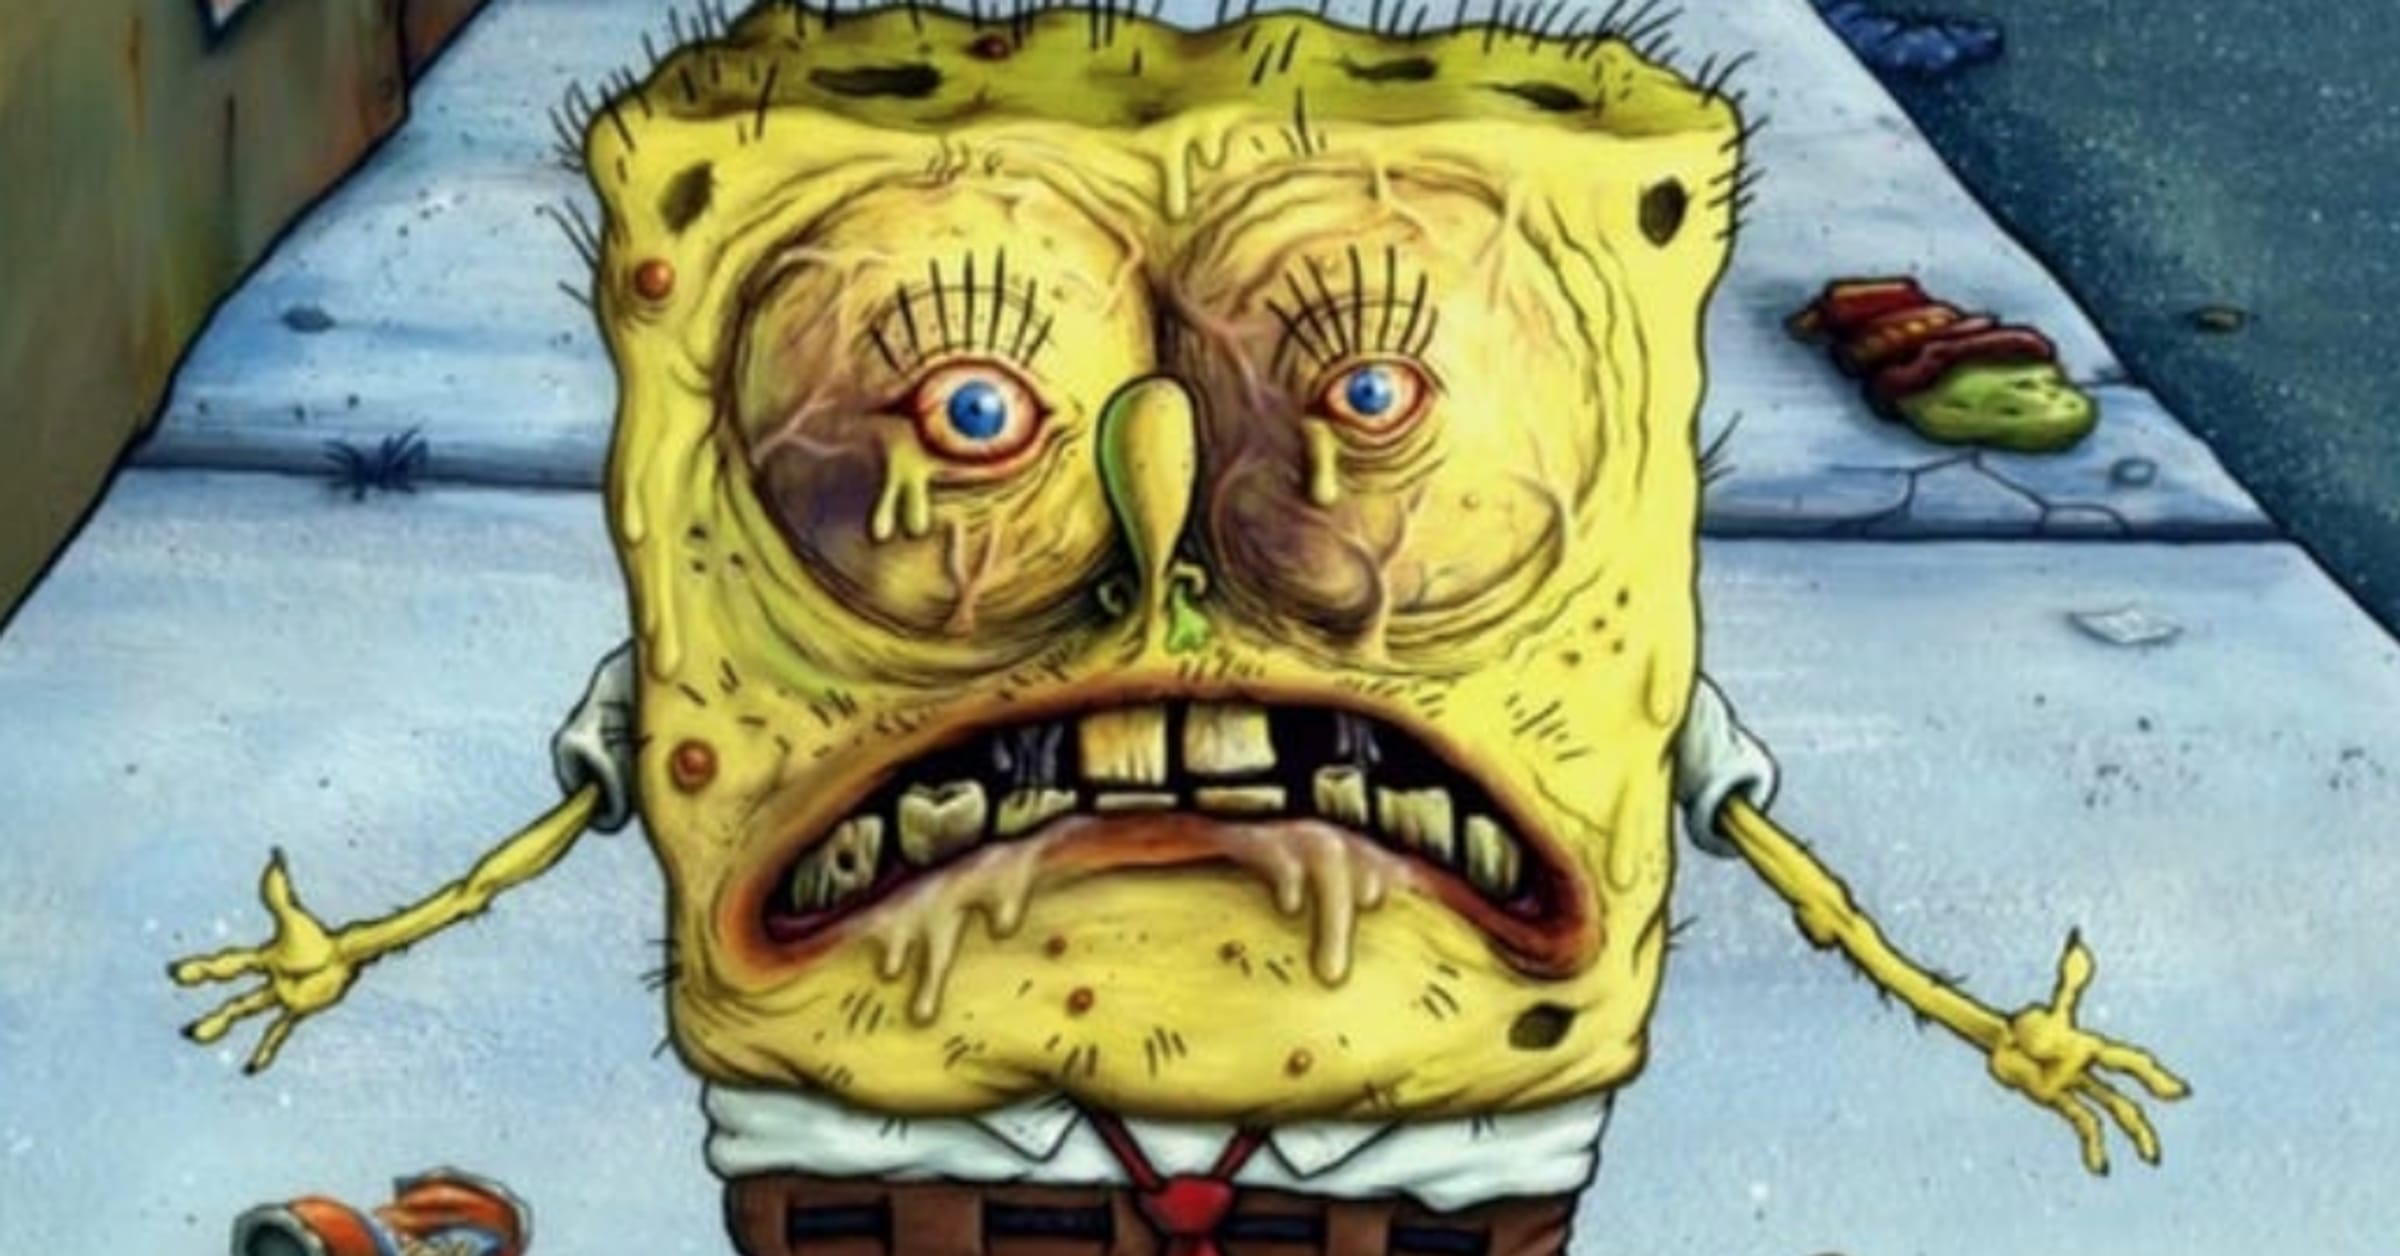 SpongeBob SquarePants - still sad 16 years later